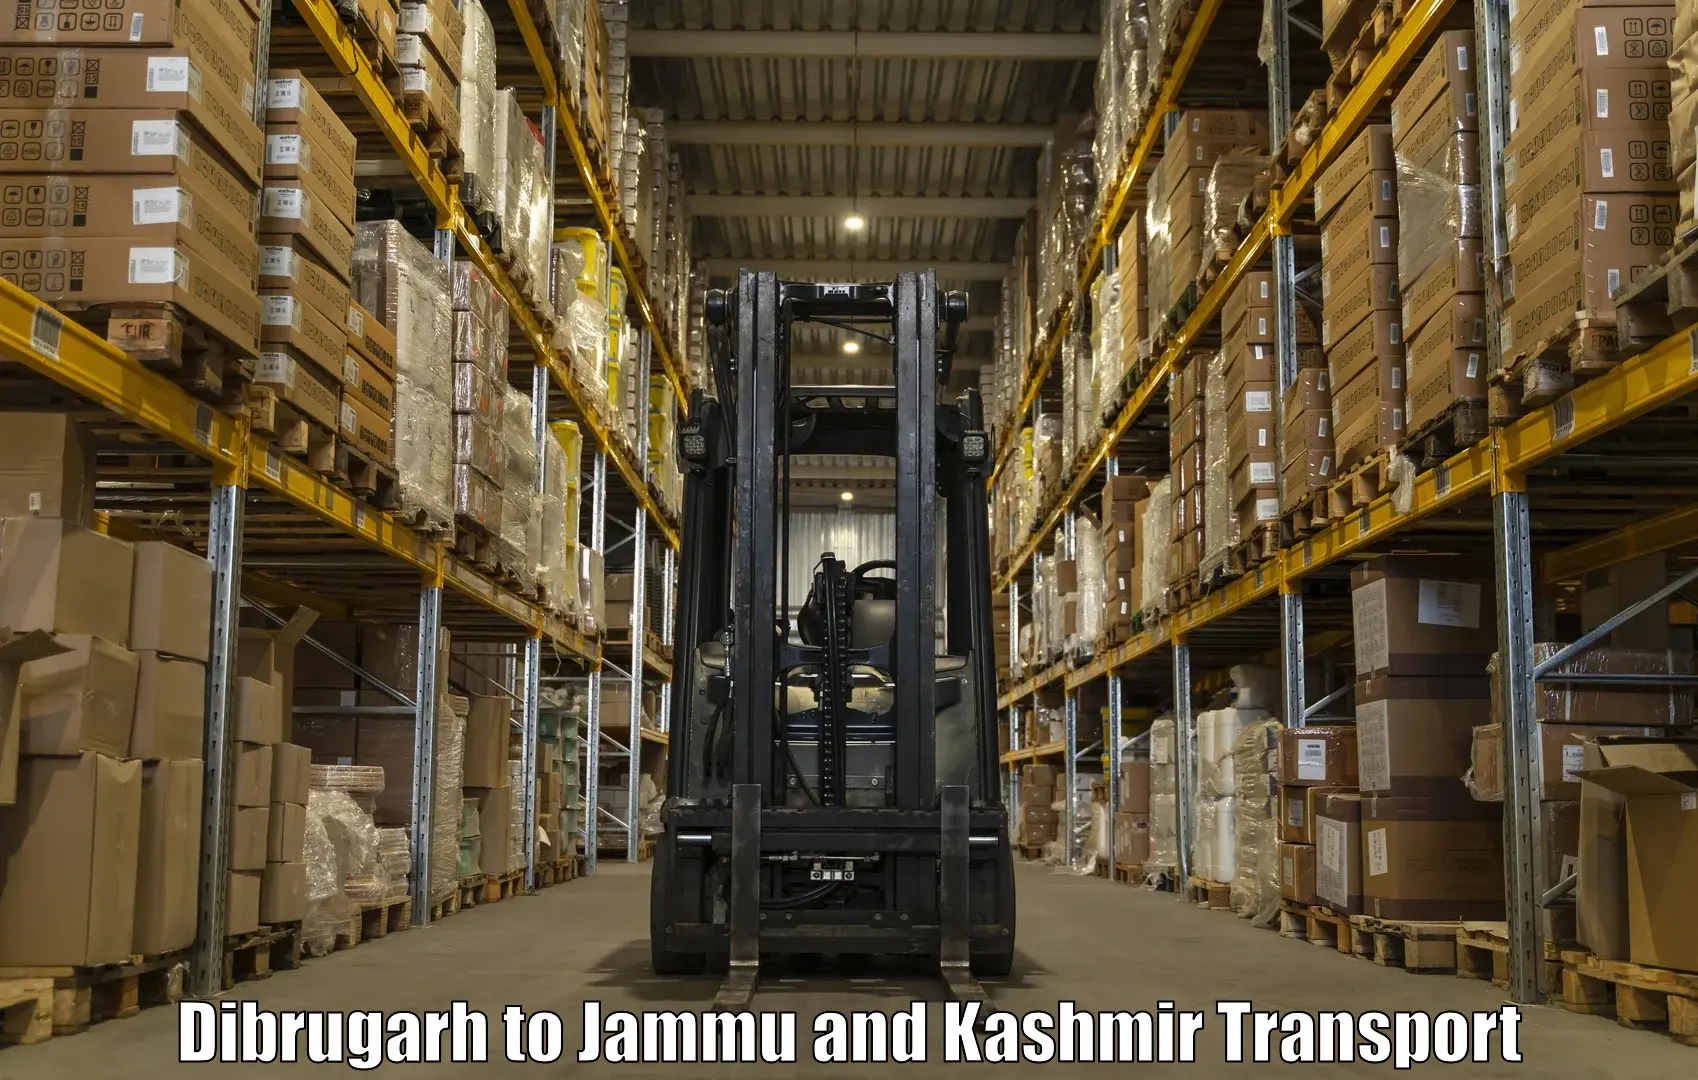 Package delivery services Dibrugarh to Srinagar Kashmir